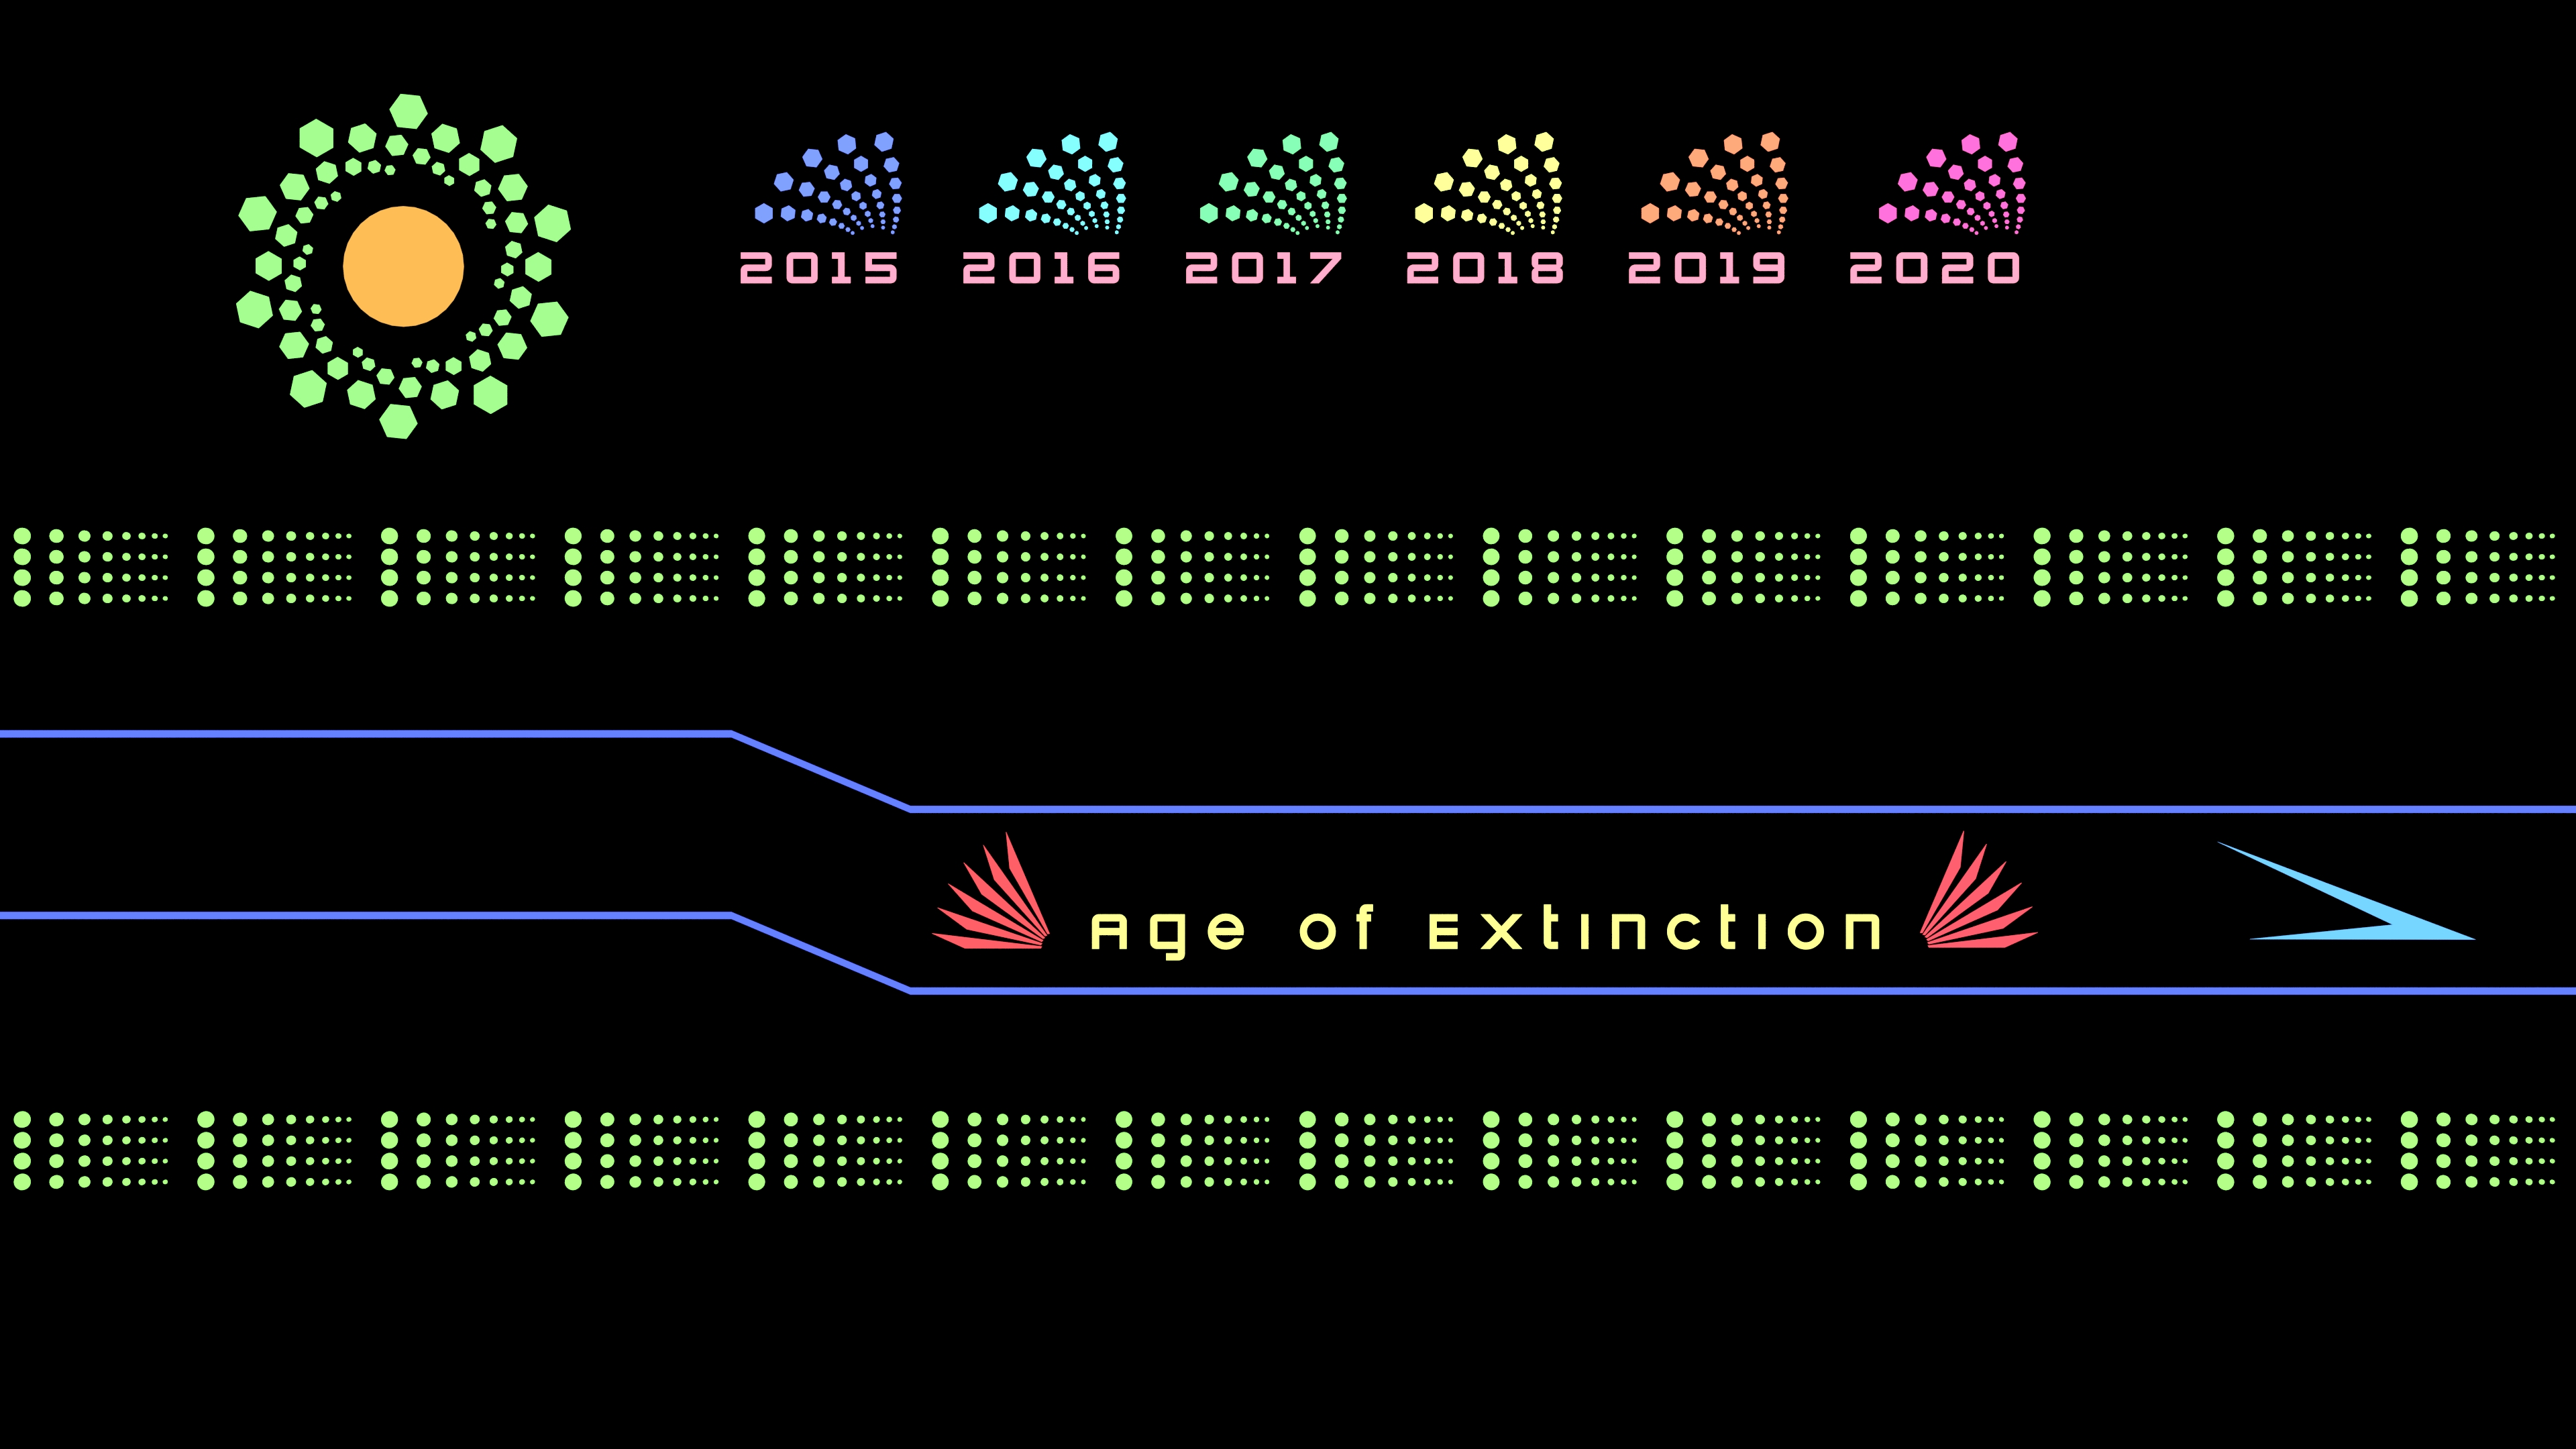 Age of extinction 2015 by viktik